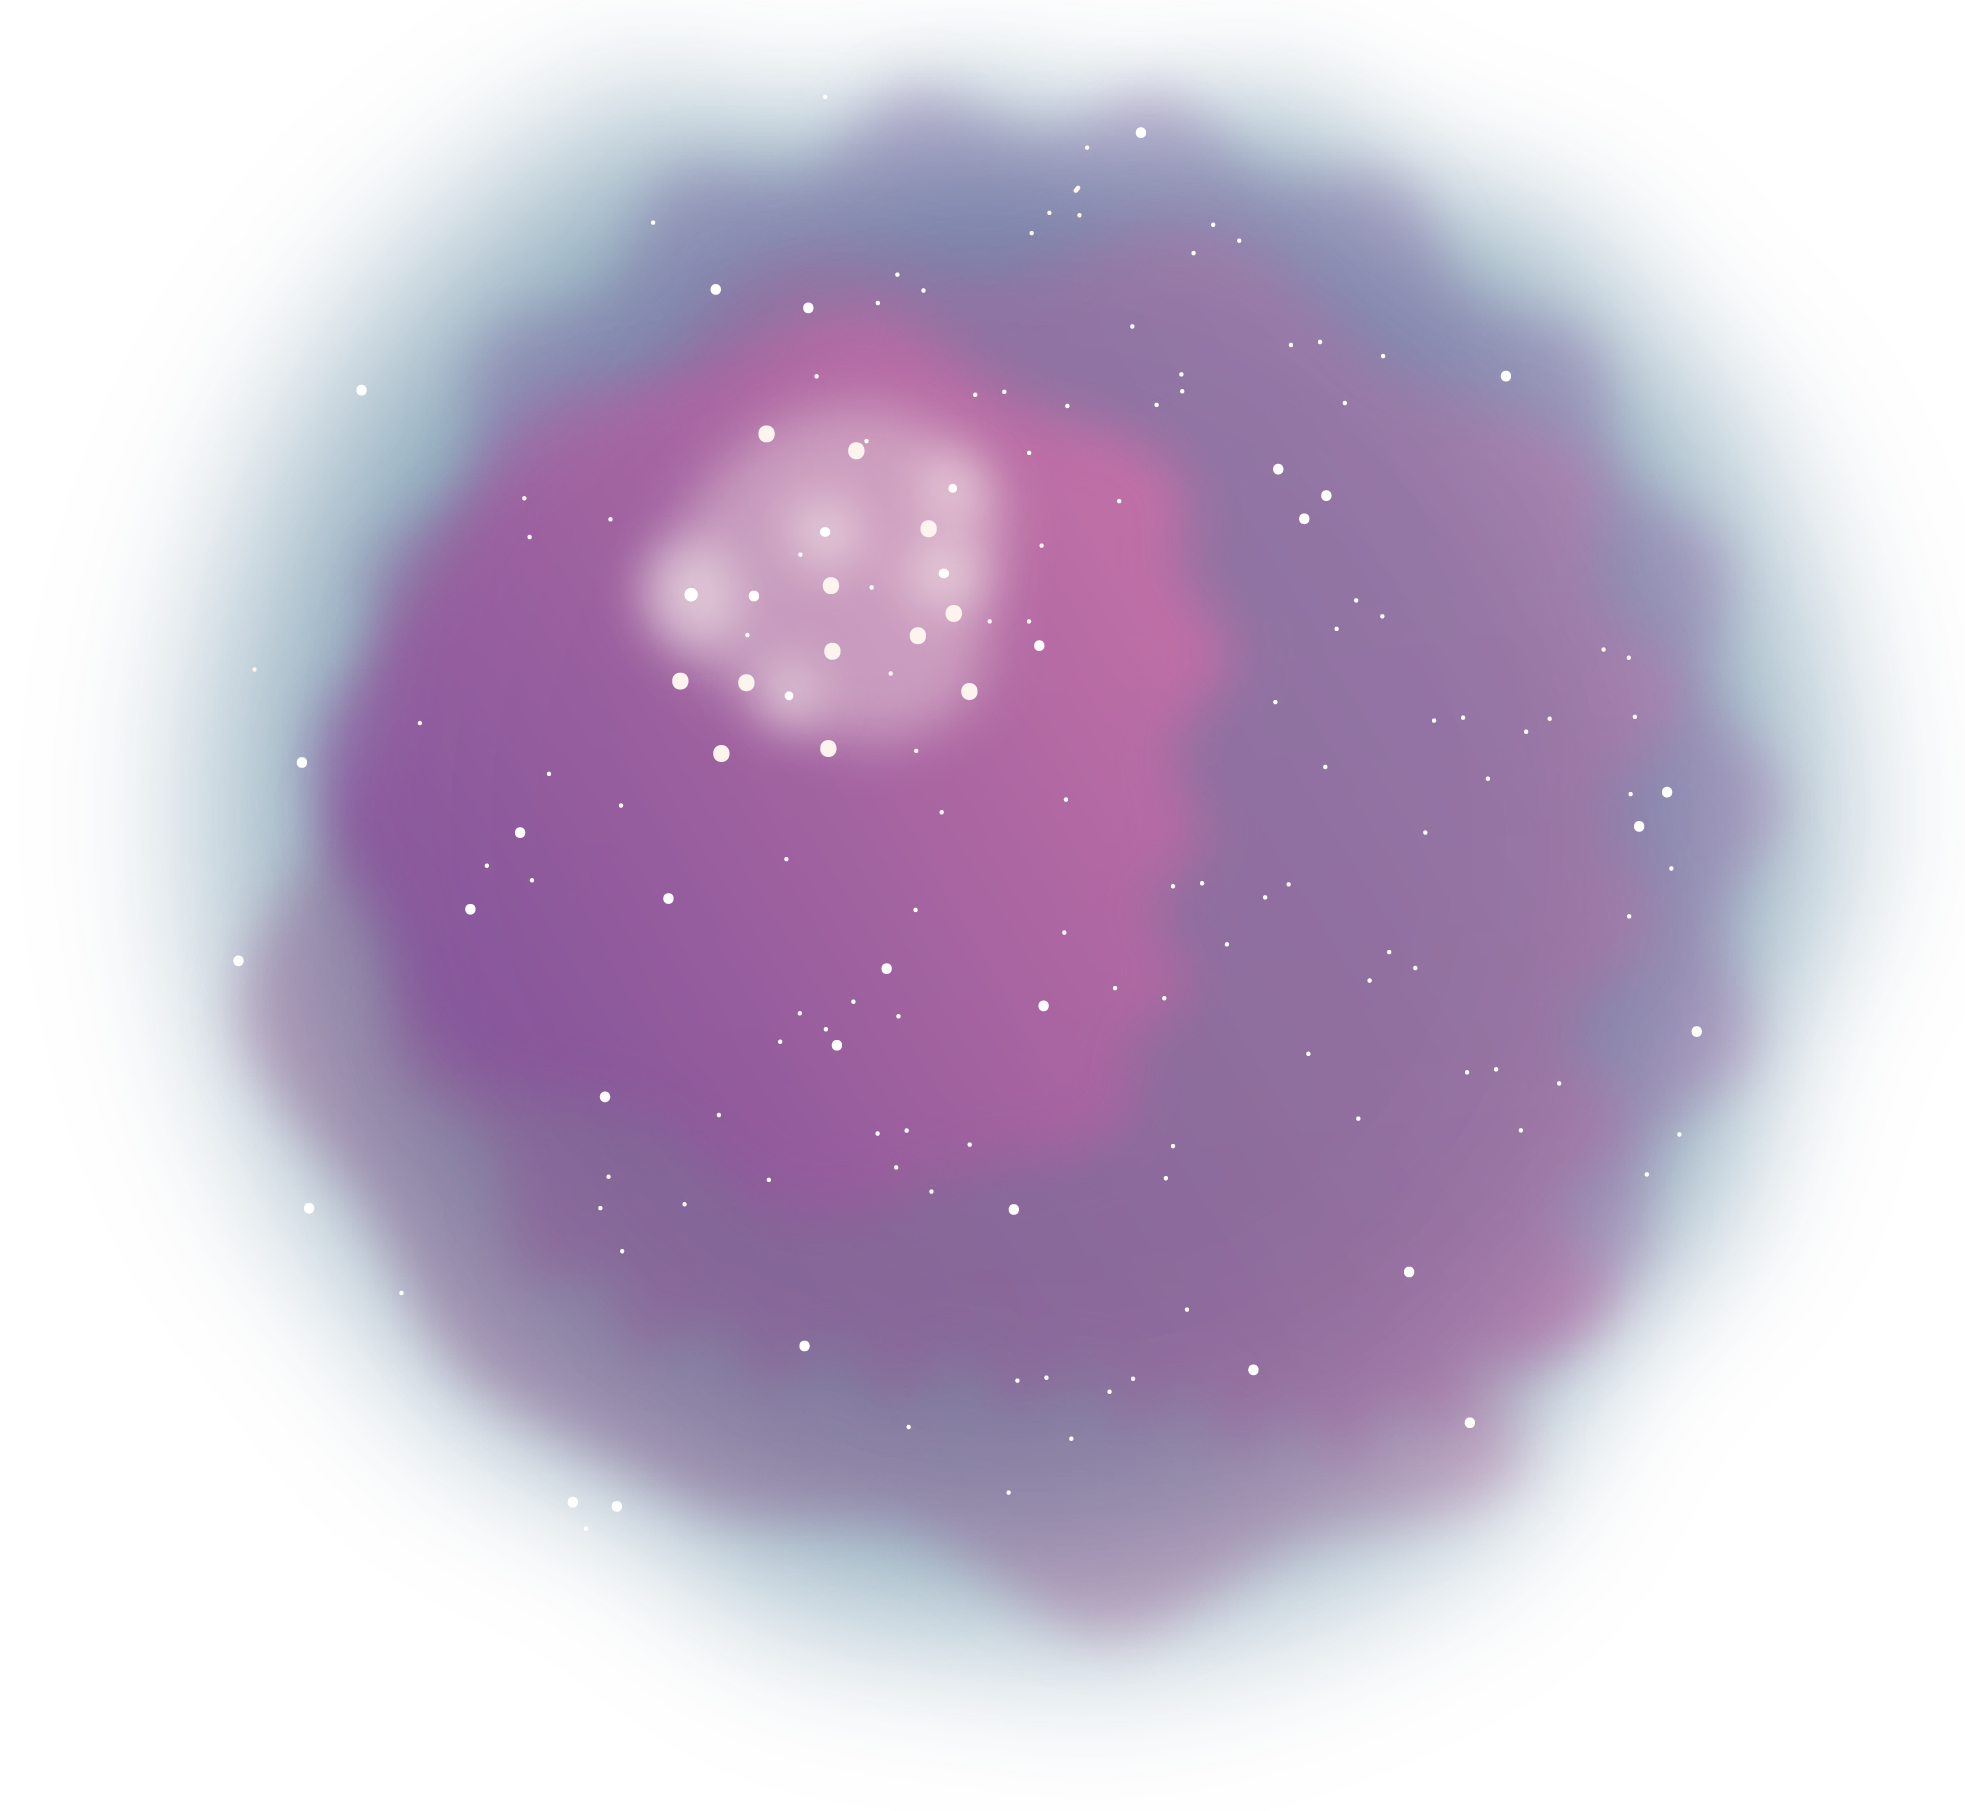 An illustration of a purple star-forming nebula.